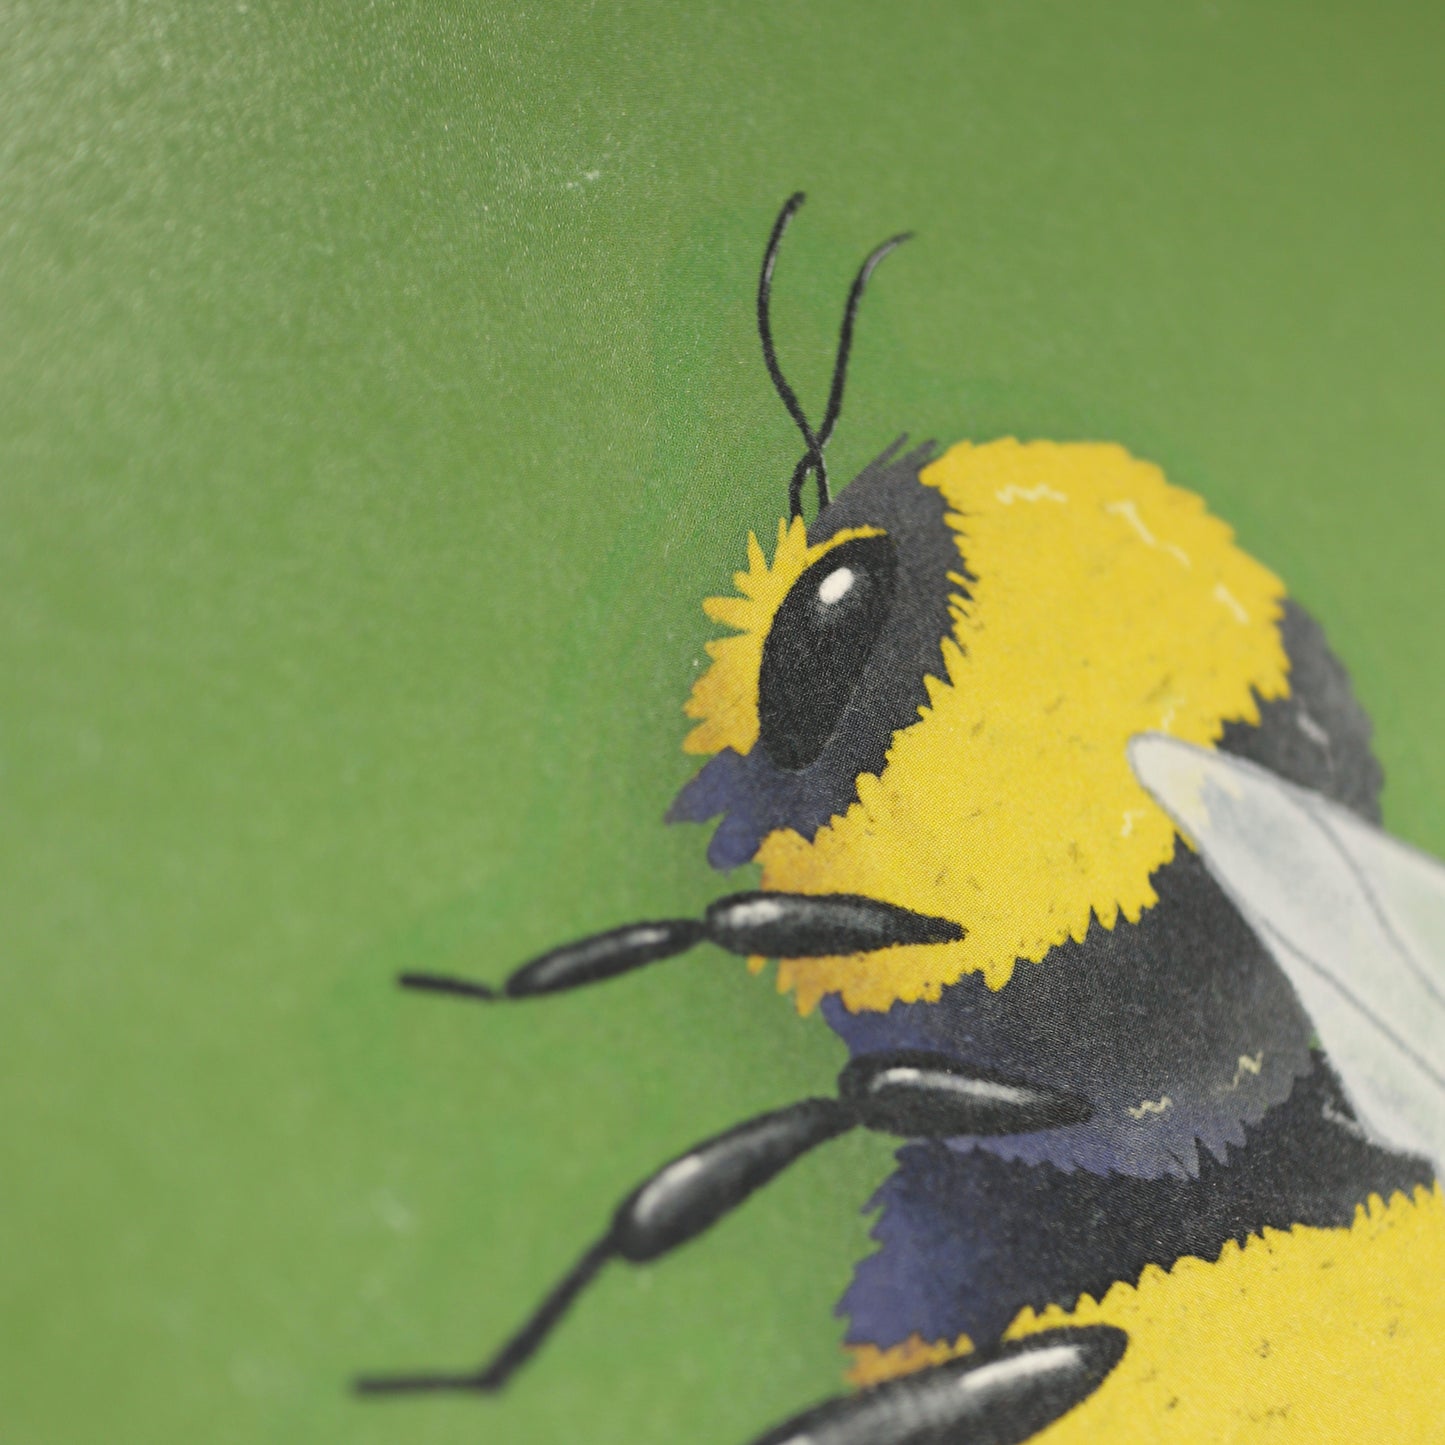 Bumblebees A5 Print